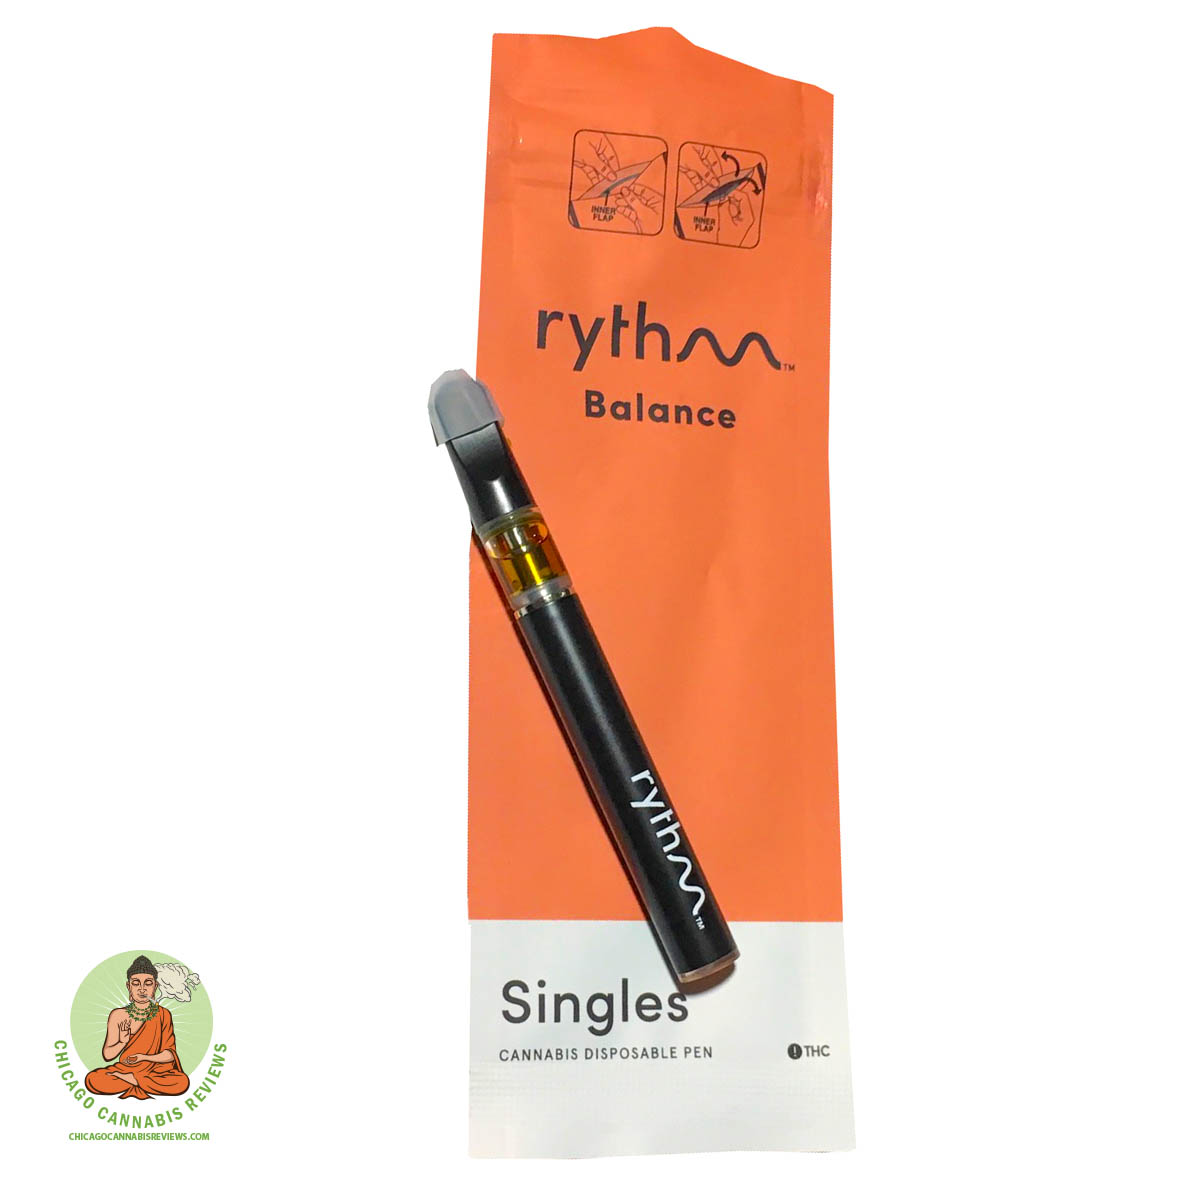 Gti Rythm Rythm Jet Fuel Balance Disposable Pen 300mg Review Sunnyside Elmwood Park Dispensary March 2020